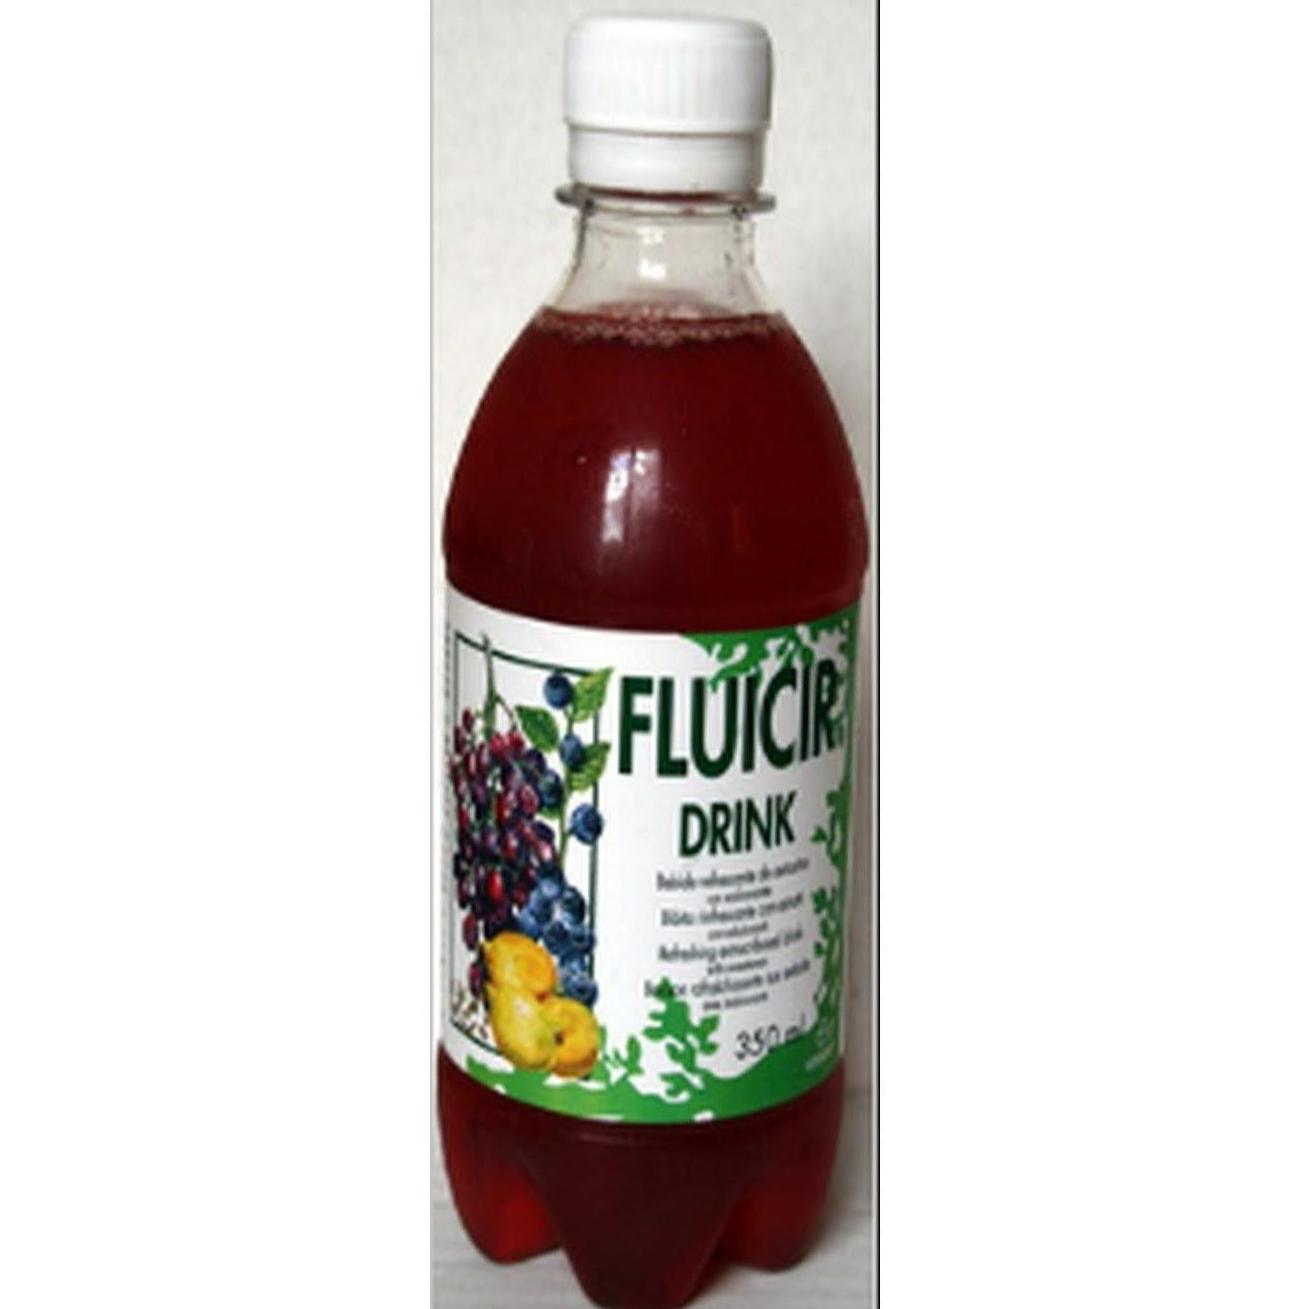 Fluicir Drink: Productos de Naturhouse Logroño }}